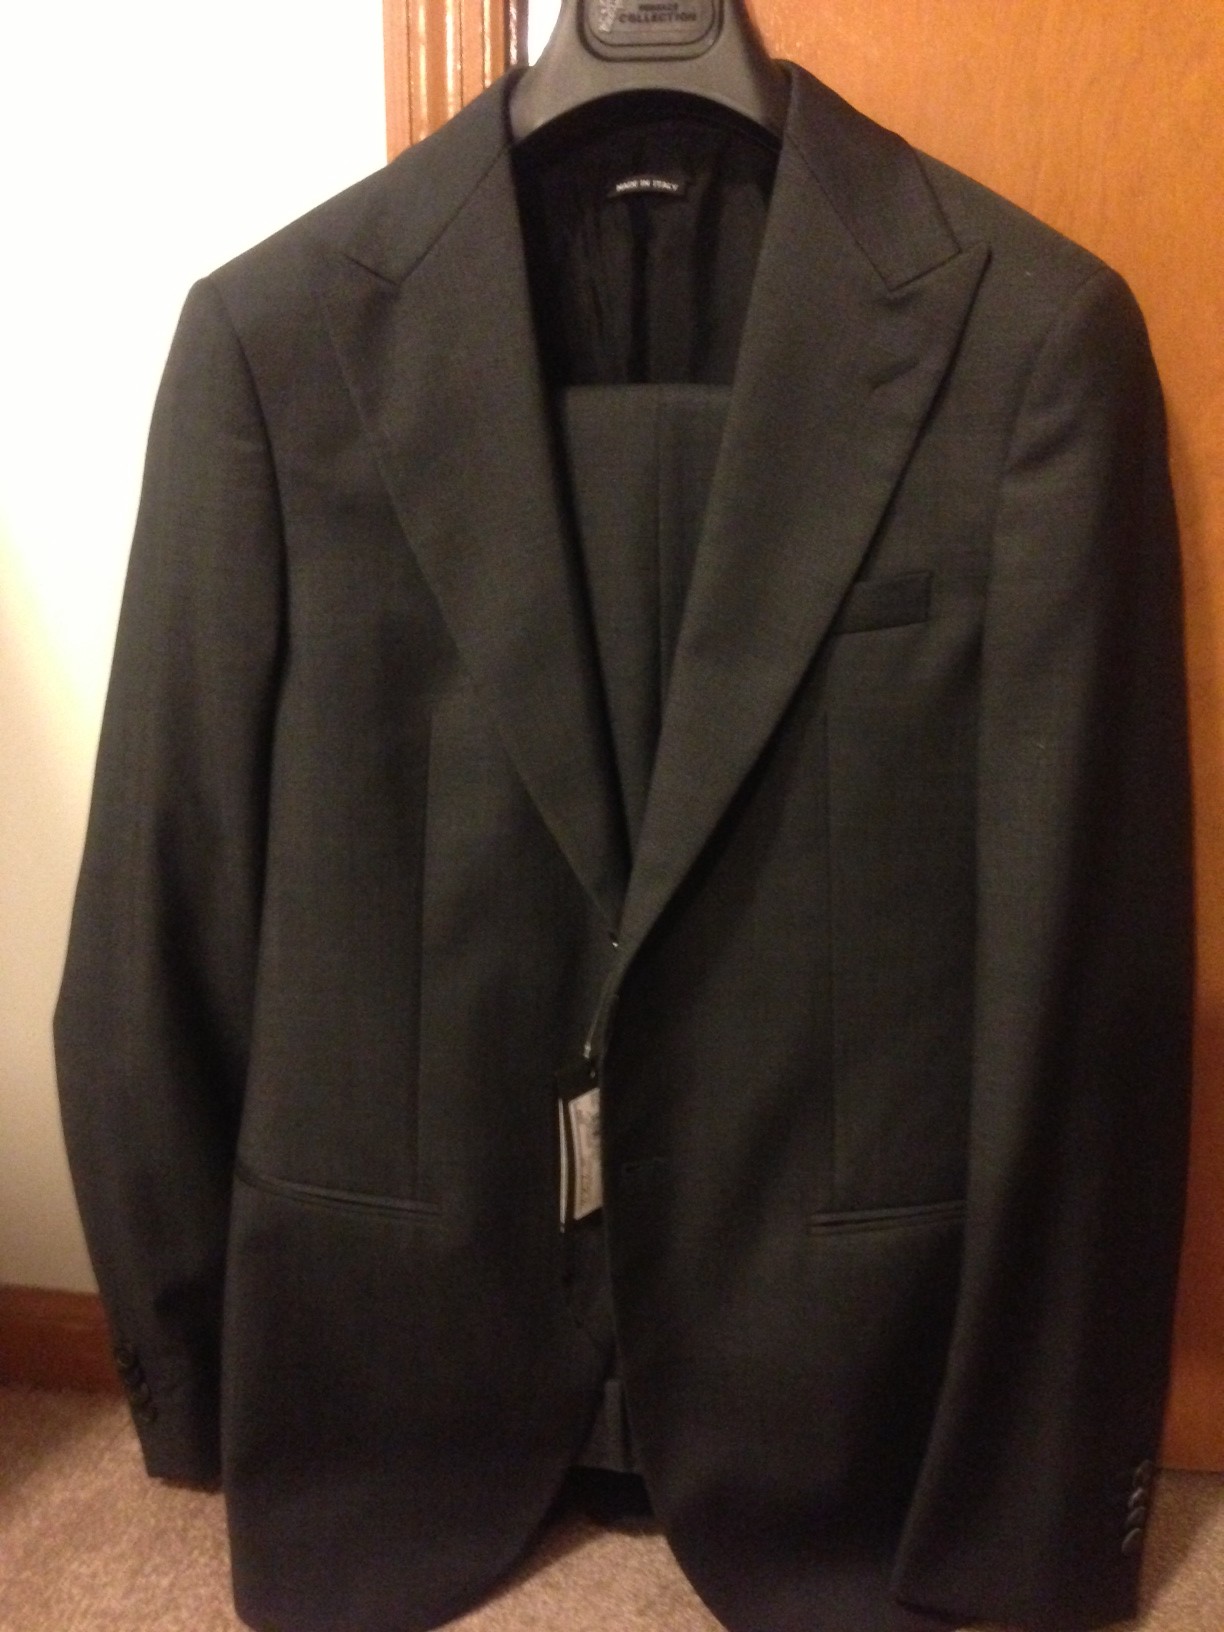 Giorgio Armani Men's Suit (Pic) | Styleforum